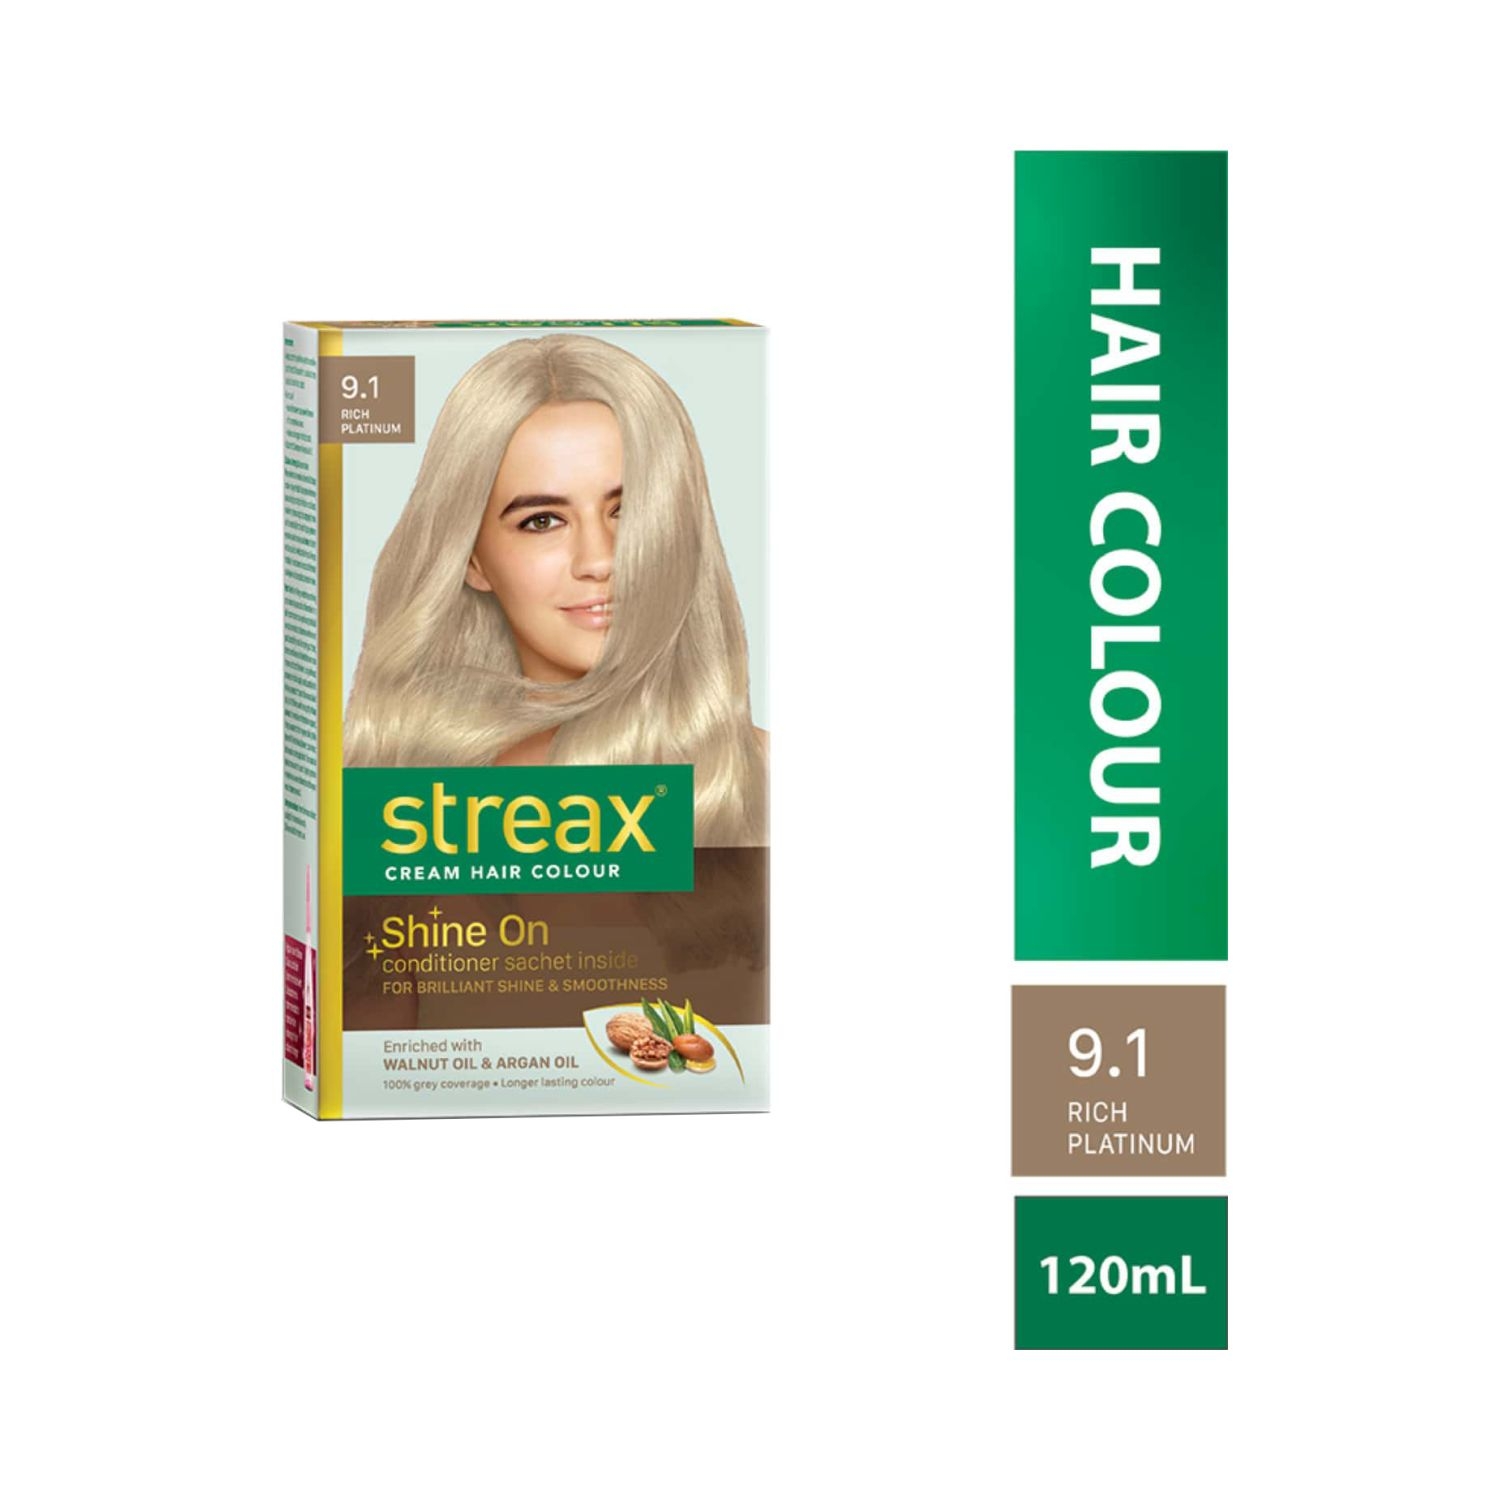 Available Matrix small hair rebonding pouch Contact-9817603140  #hairrebondingkl #hairstyles #keratintreatment #mua | Instagram